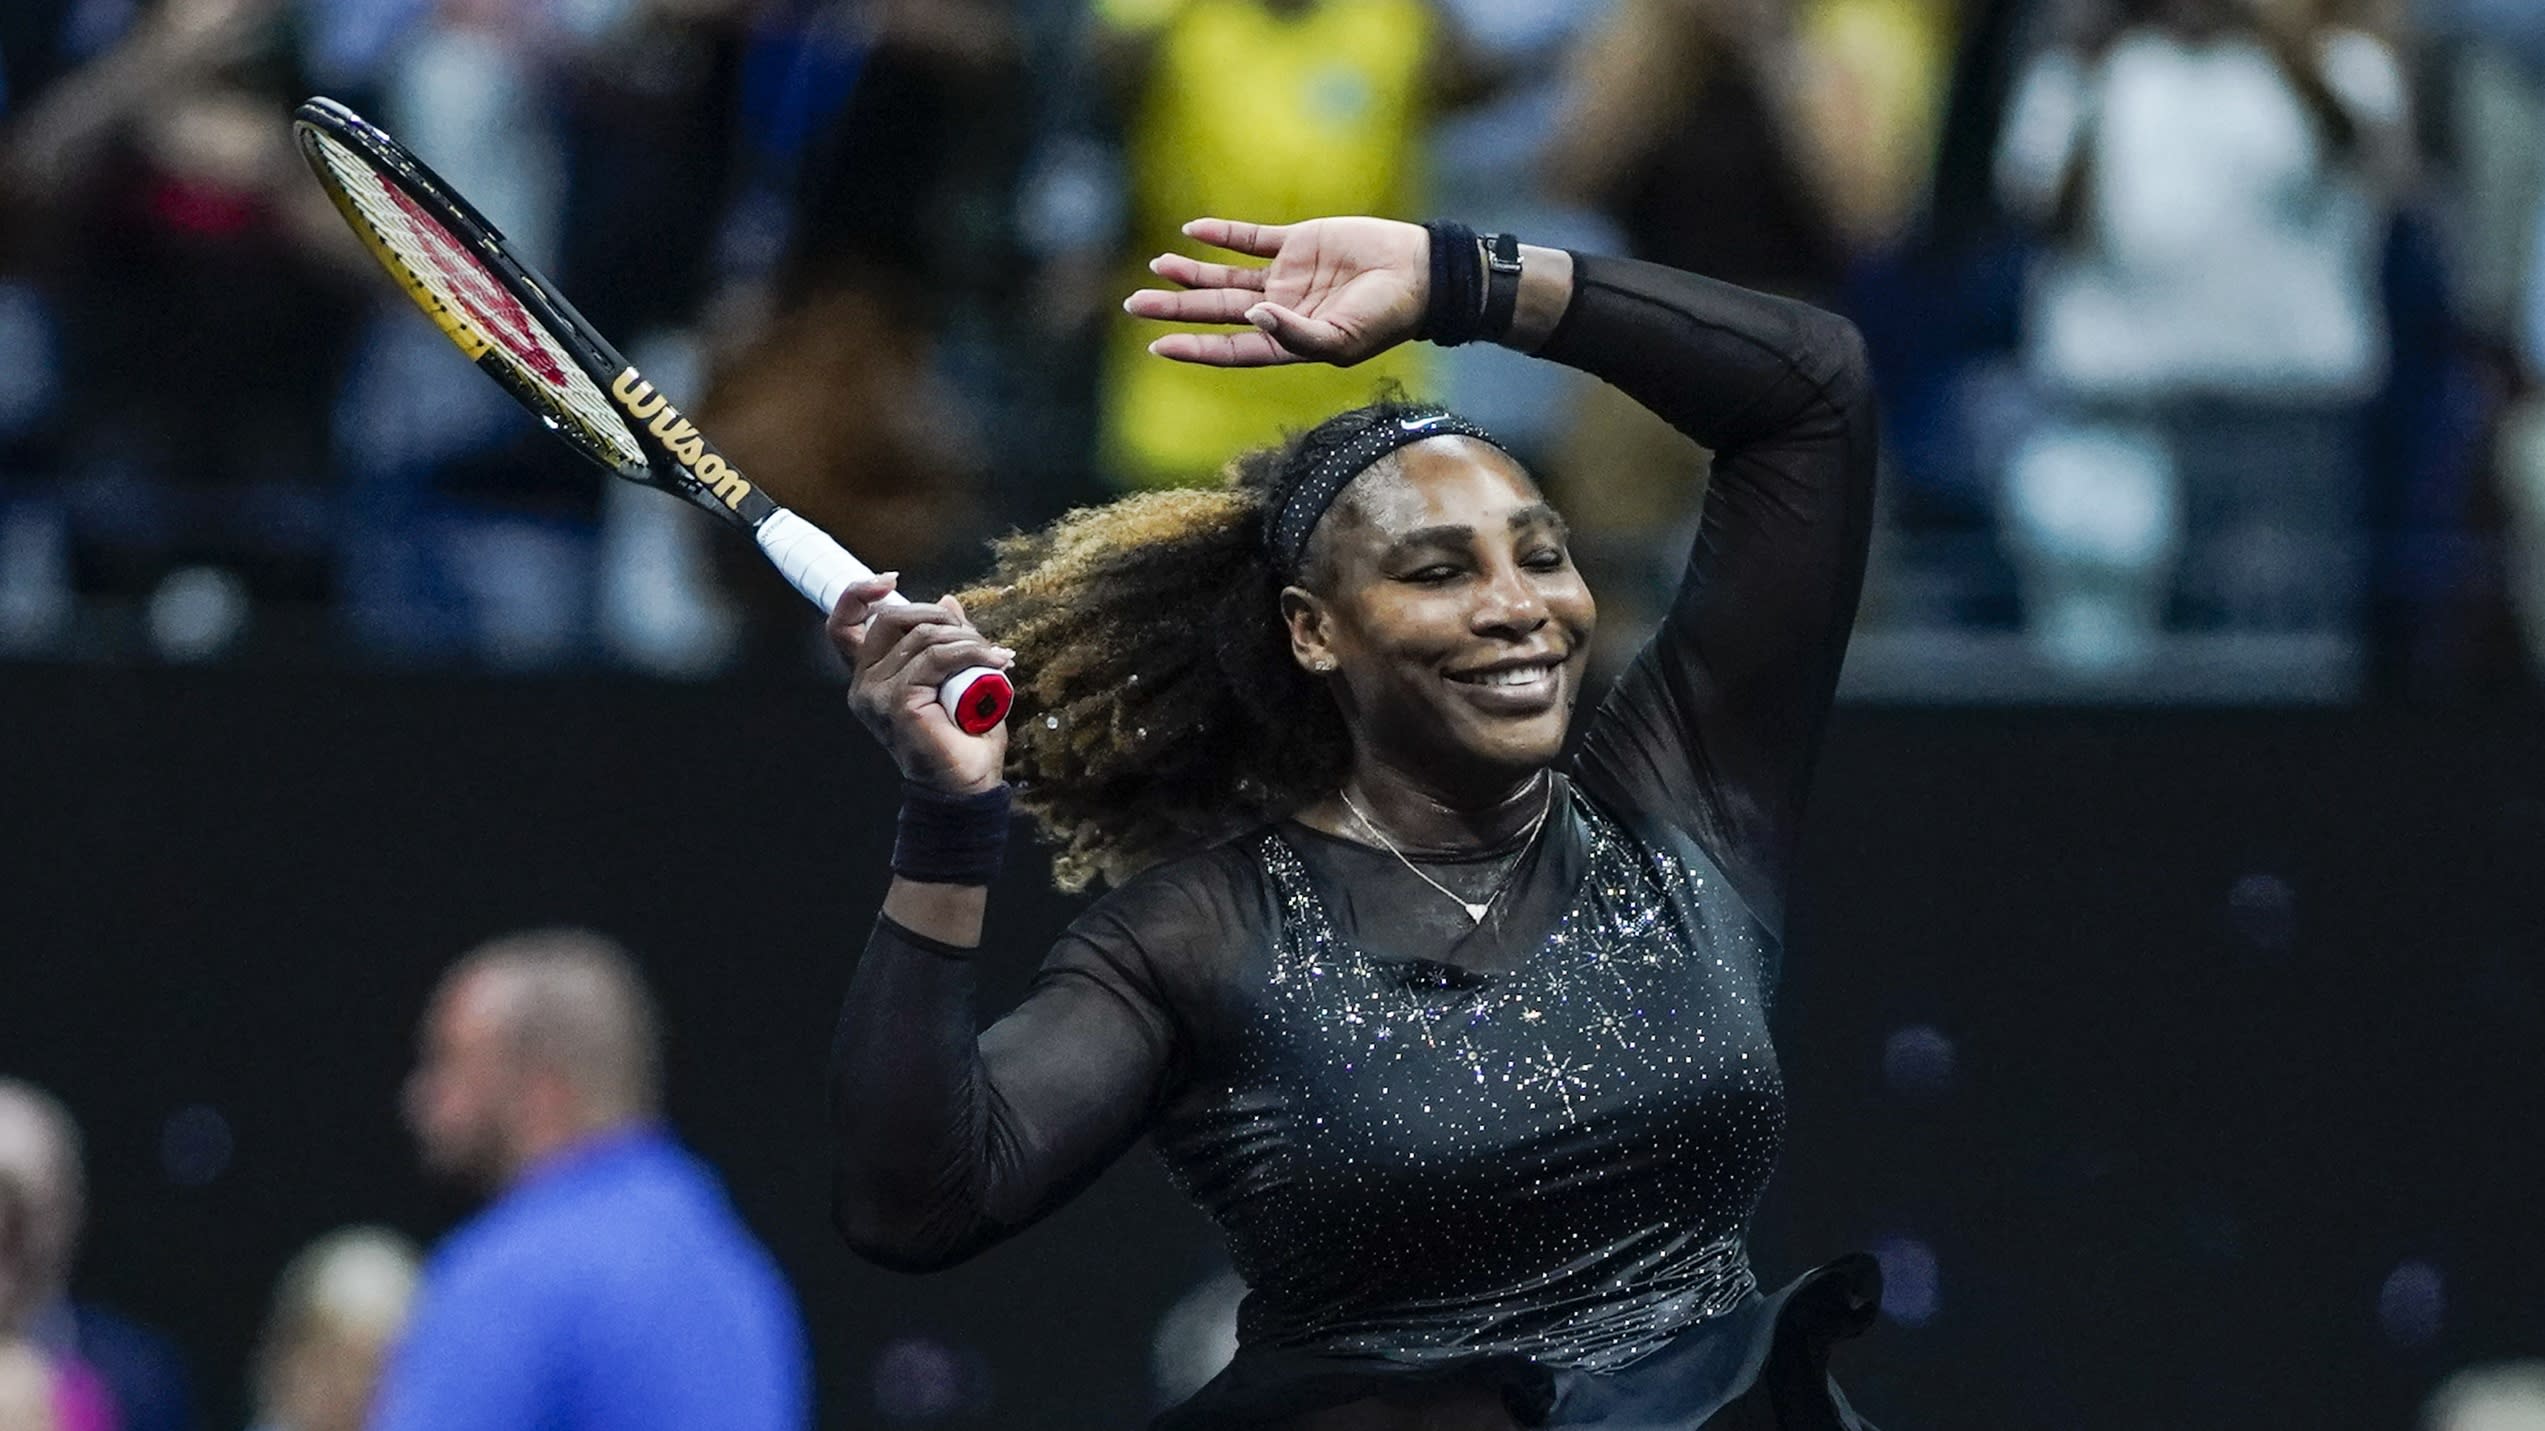 Serena Williams stuns with upset win at U.S